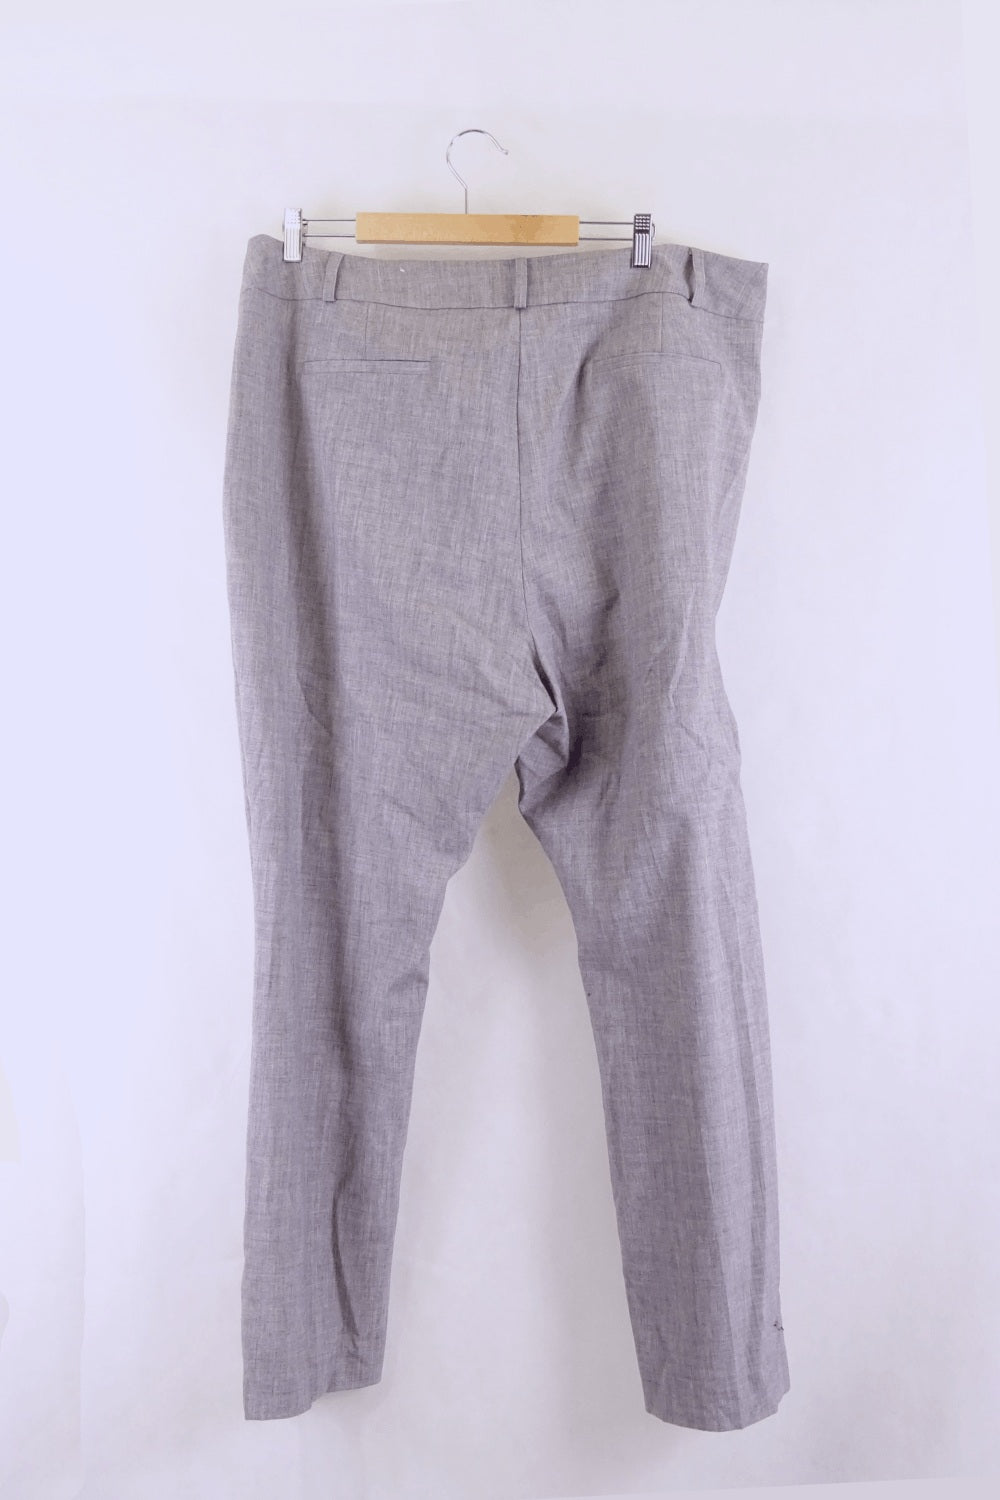 Tokito Curve Grey Pants 20